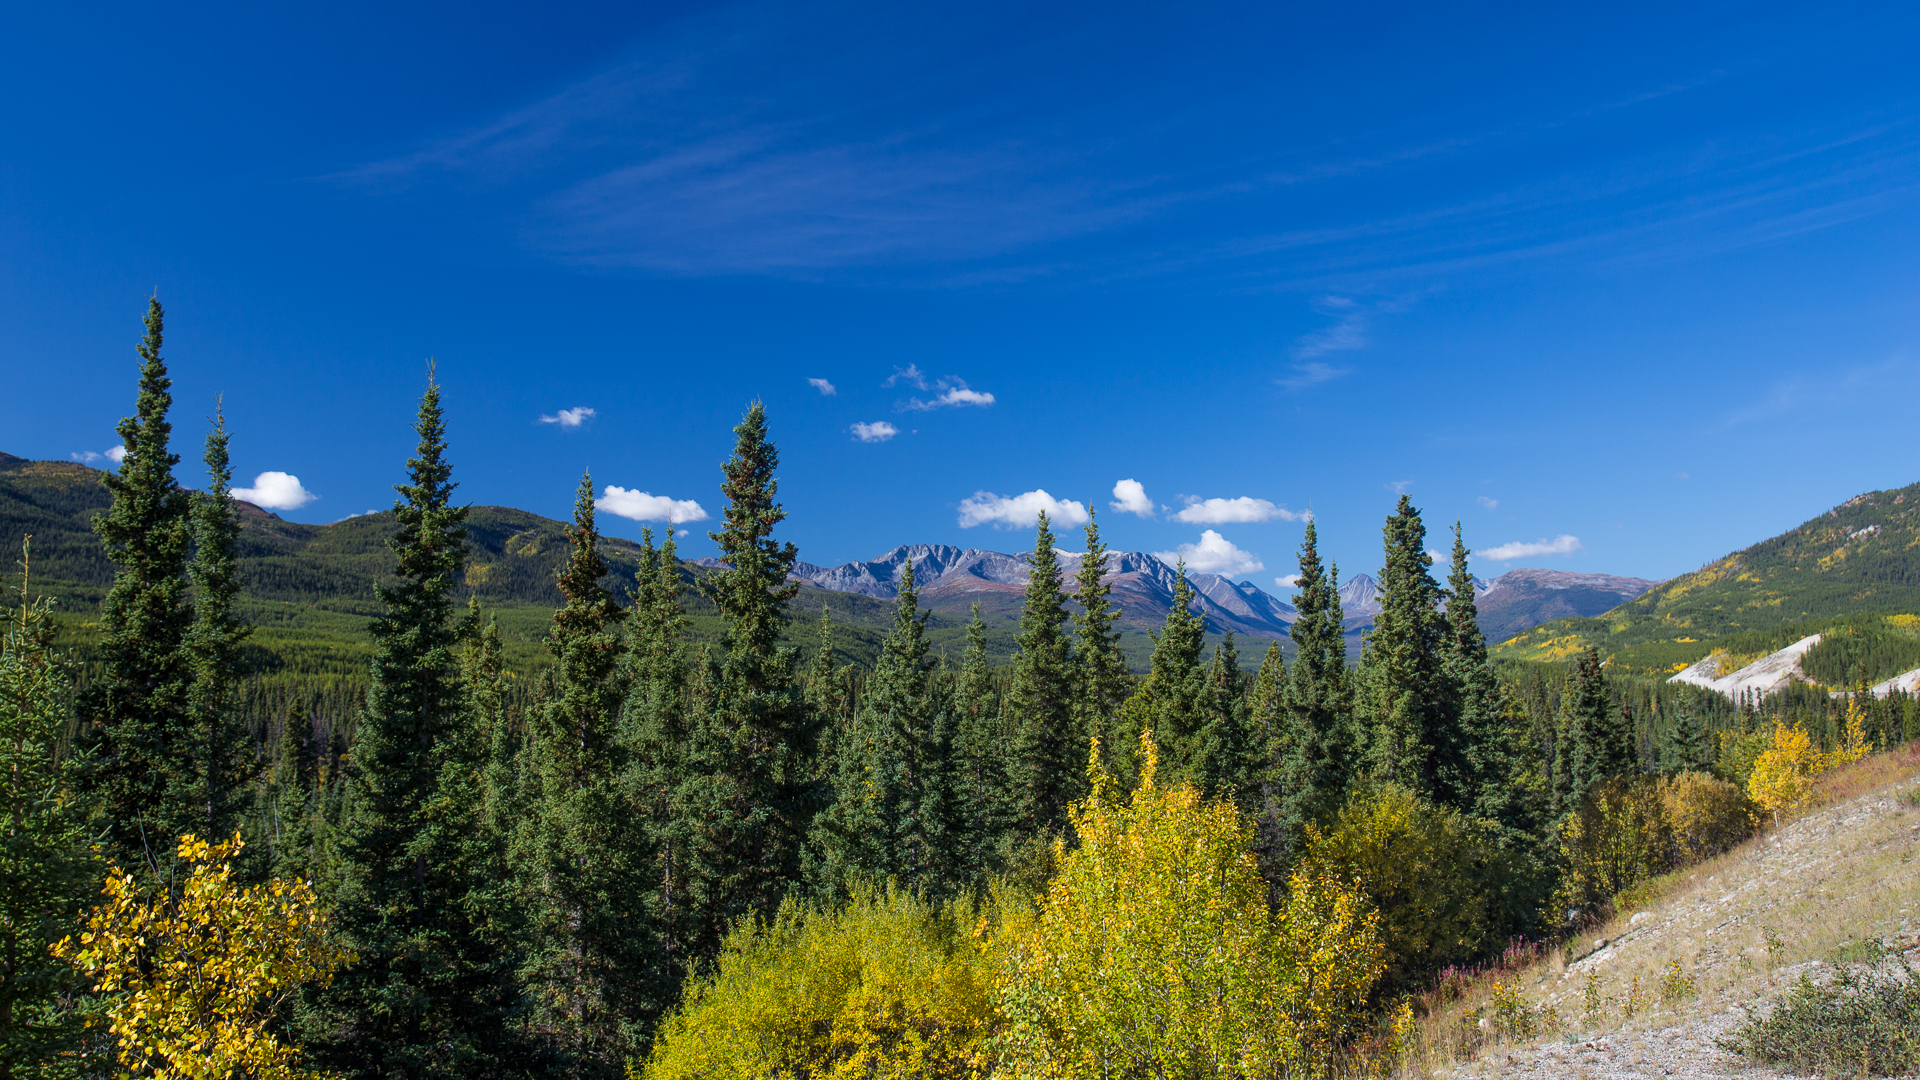 Yukon roadside viewpoint